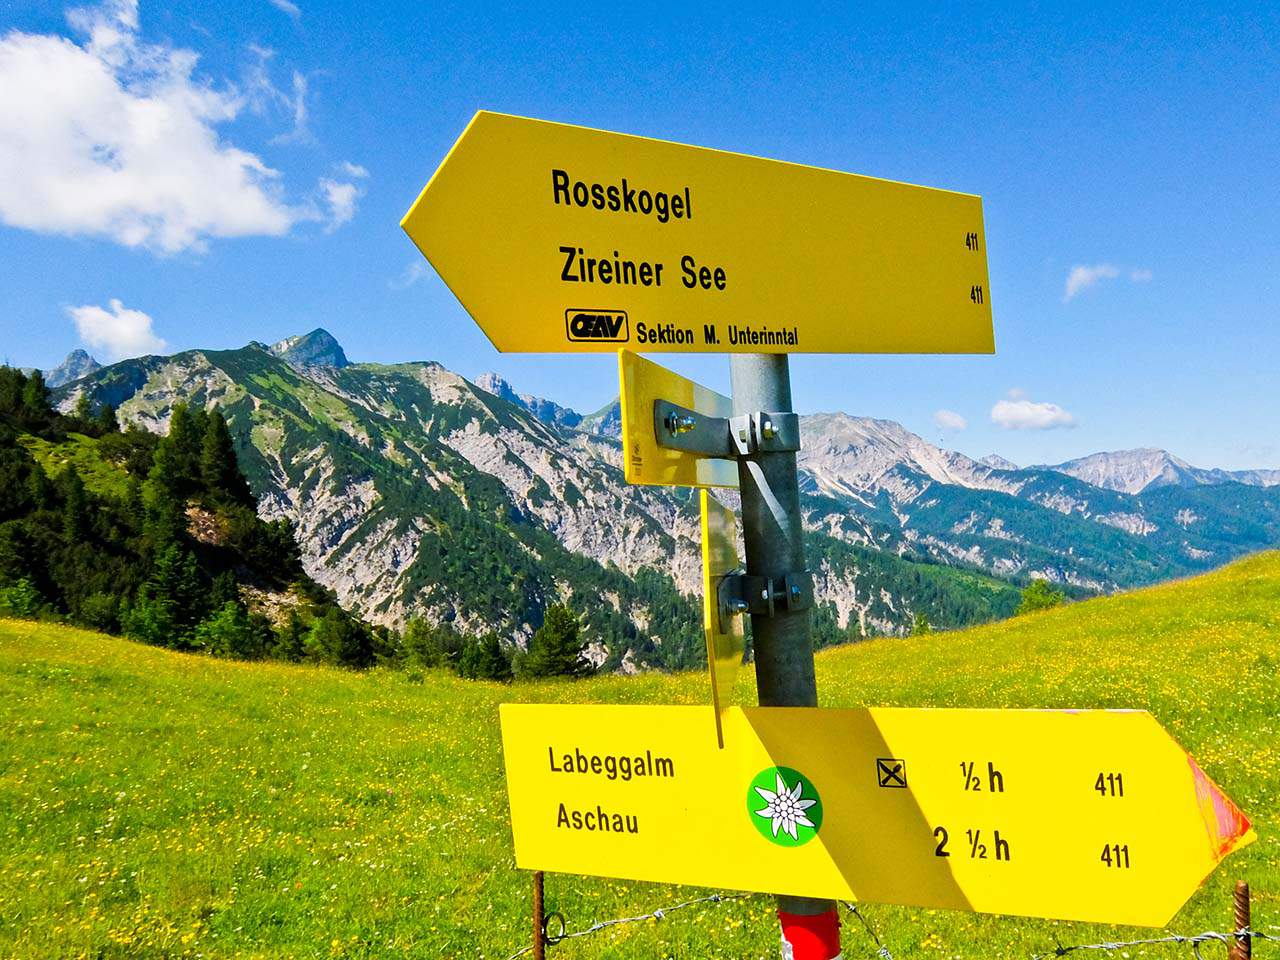 Brandenberg Alps, Tyrol - Path Signs